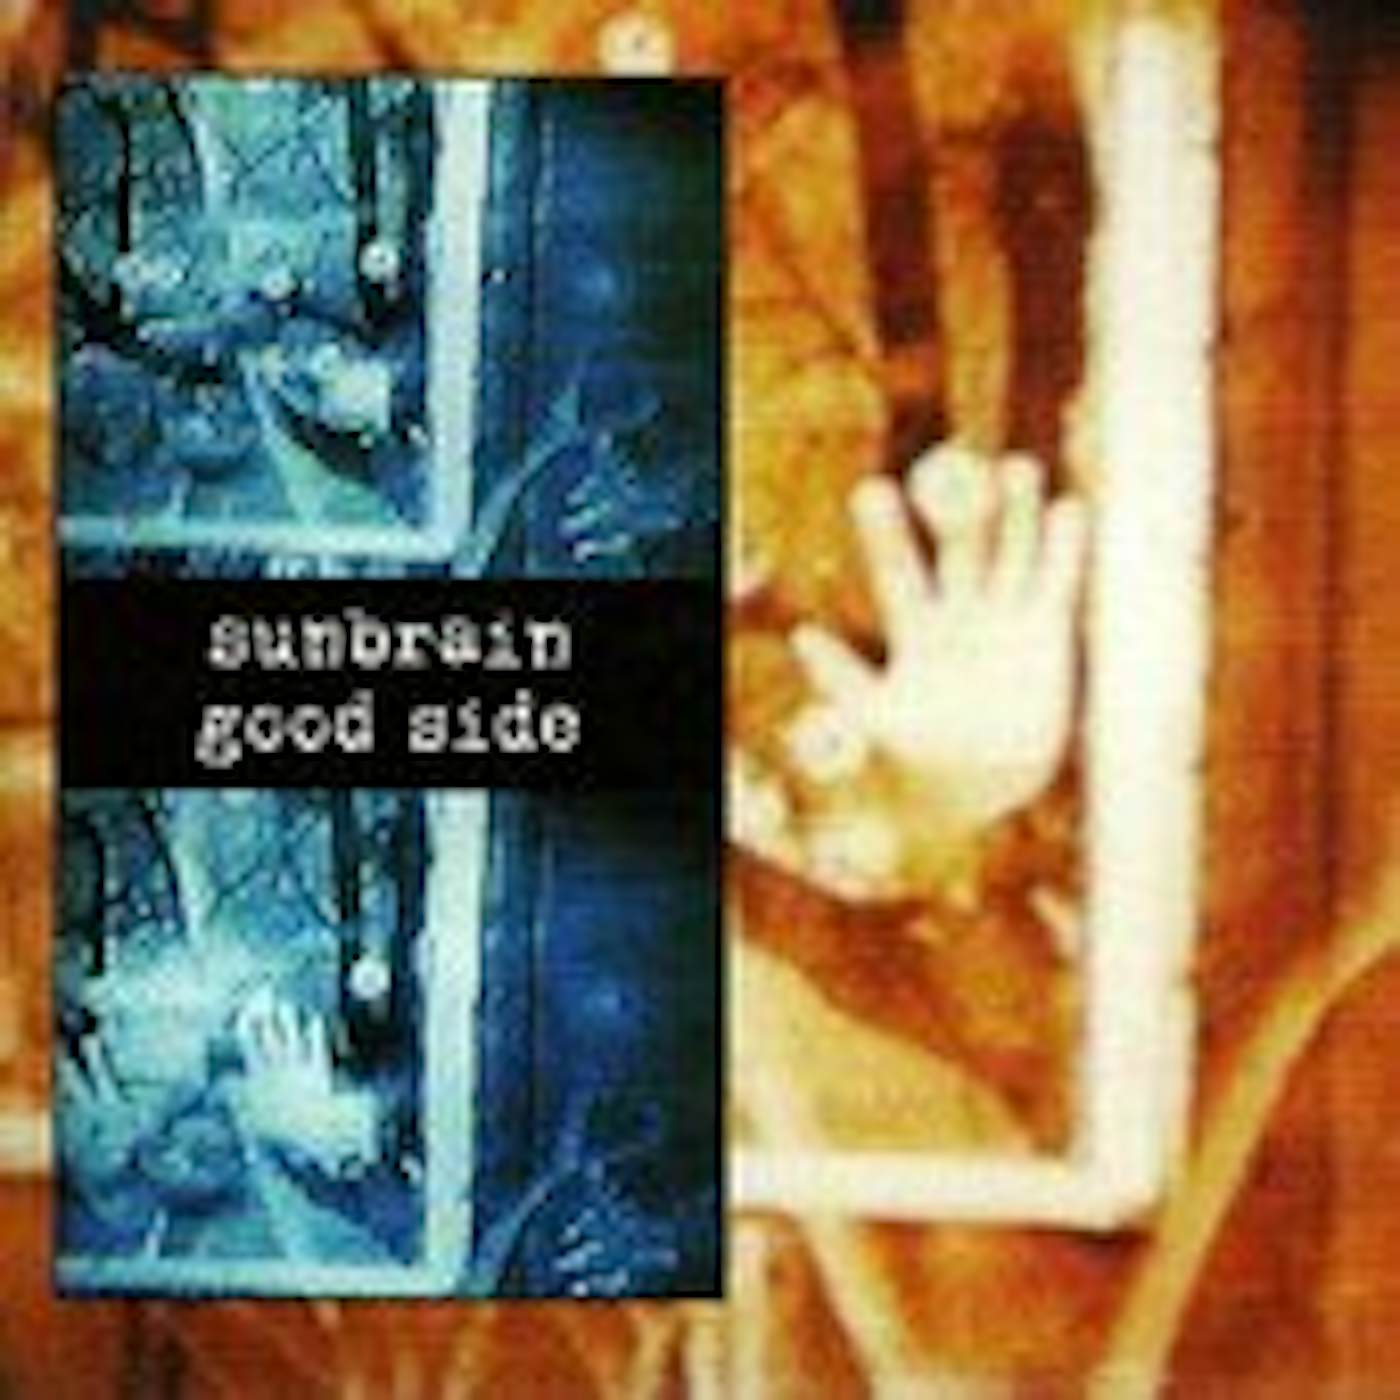 Sunbrain GOOD SIDE CD